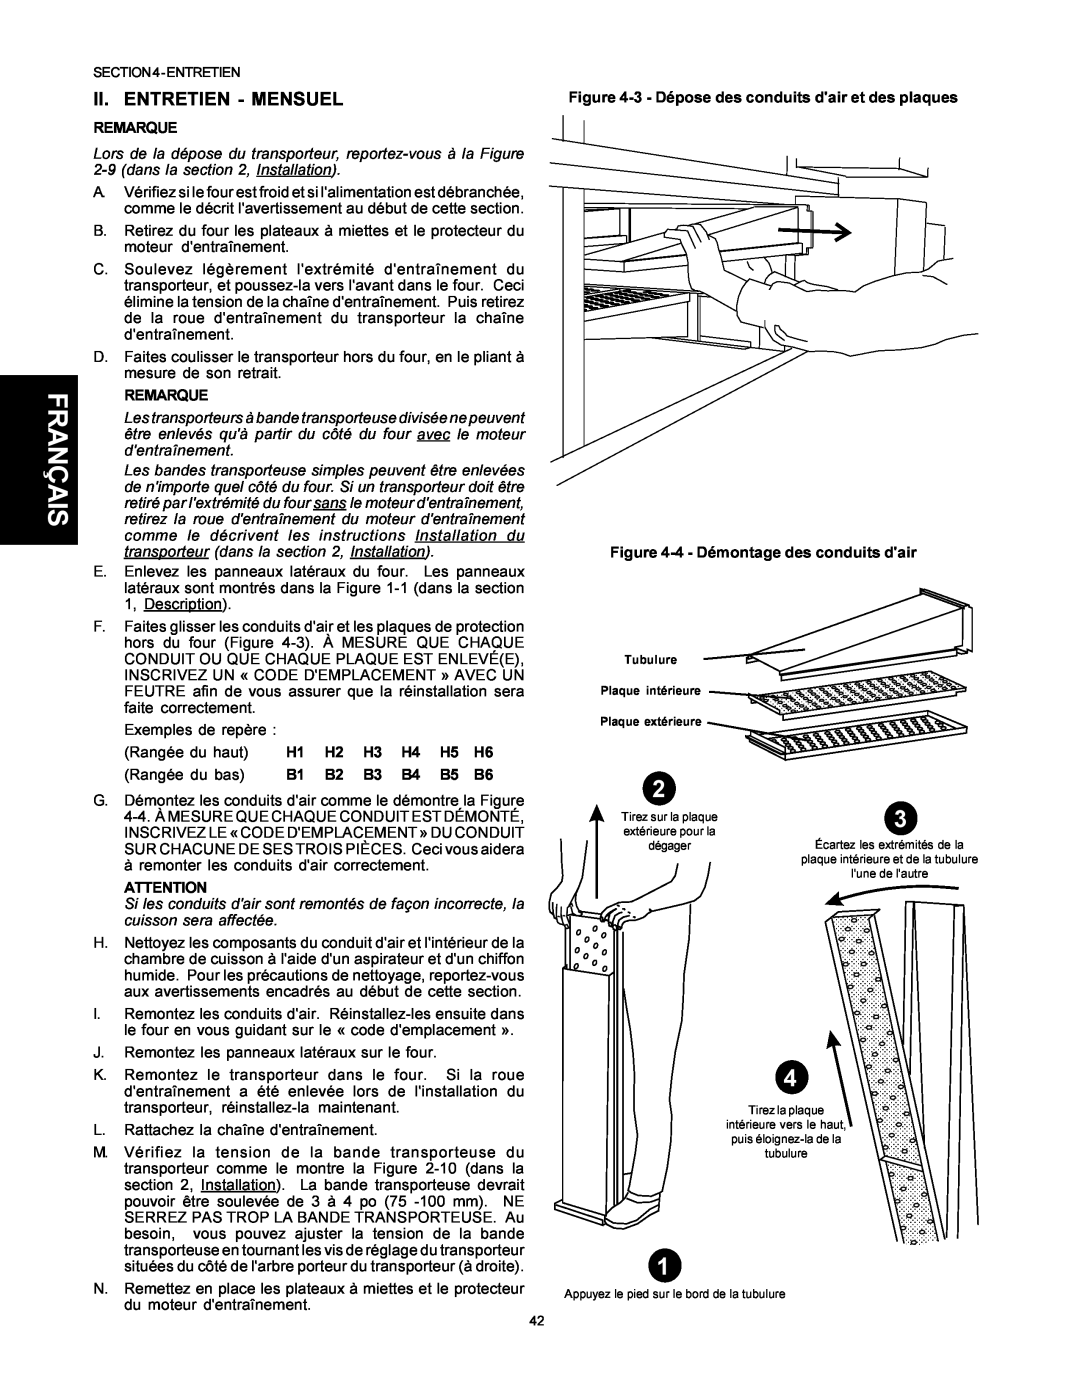 Middleby Marshall PS500 installation manual Ii. Entretien - Mensuel, Français, Remarque, Rangée du bas B1 B2 B3 B4 B5 B6 